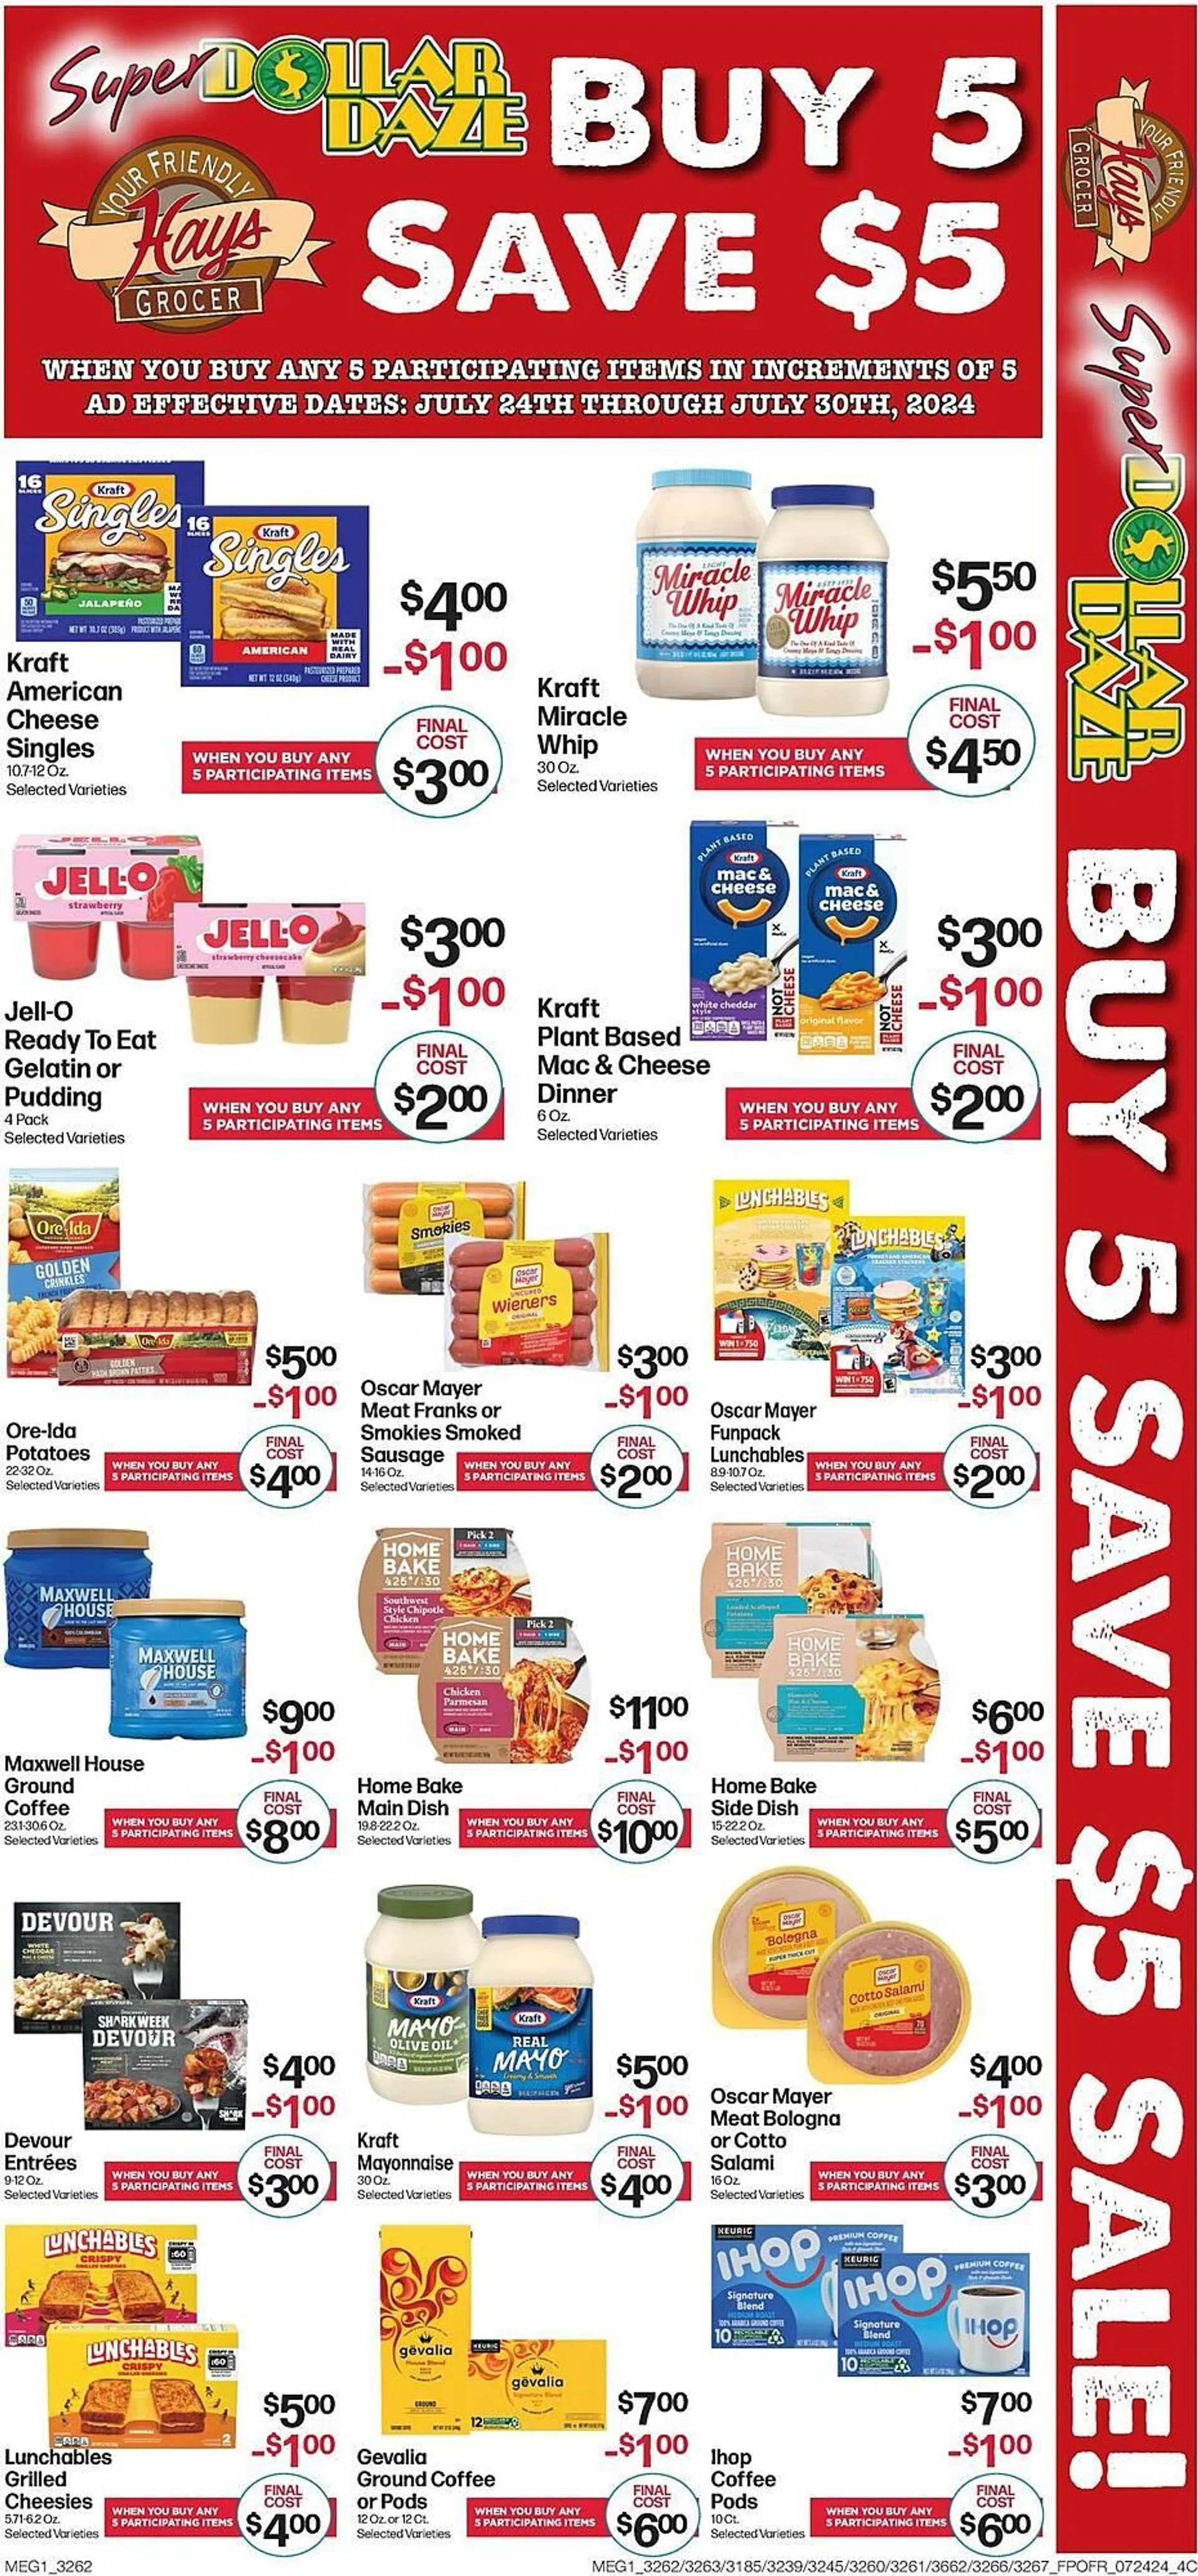 Hays Supermarket Weekly Ad - 1